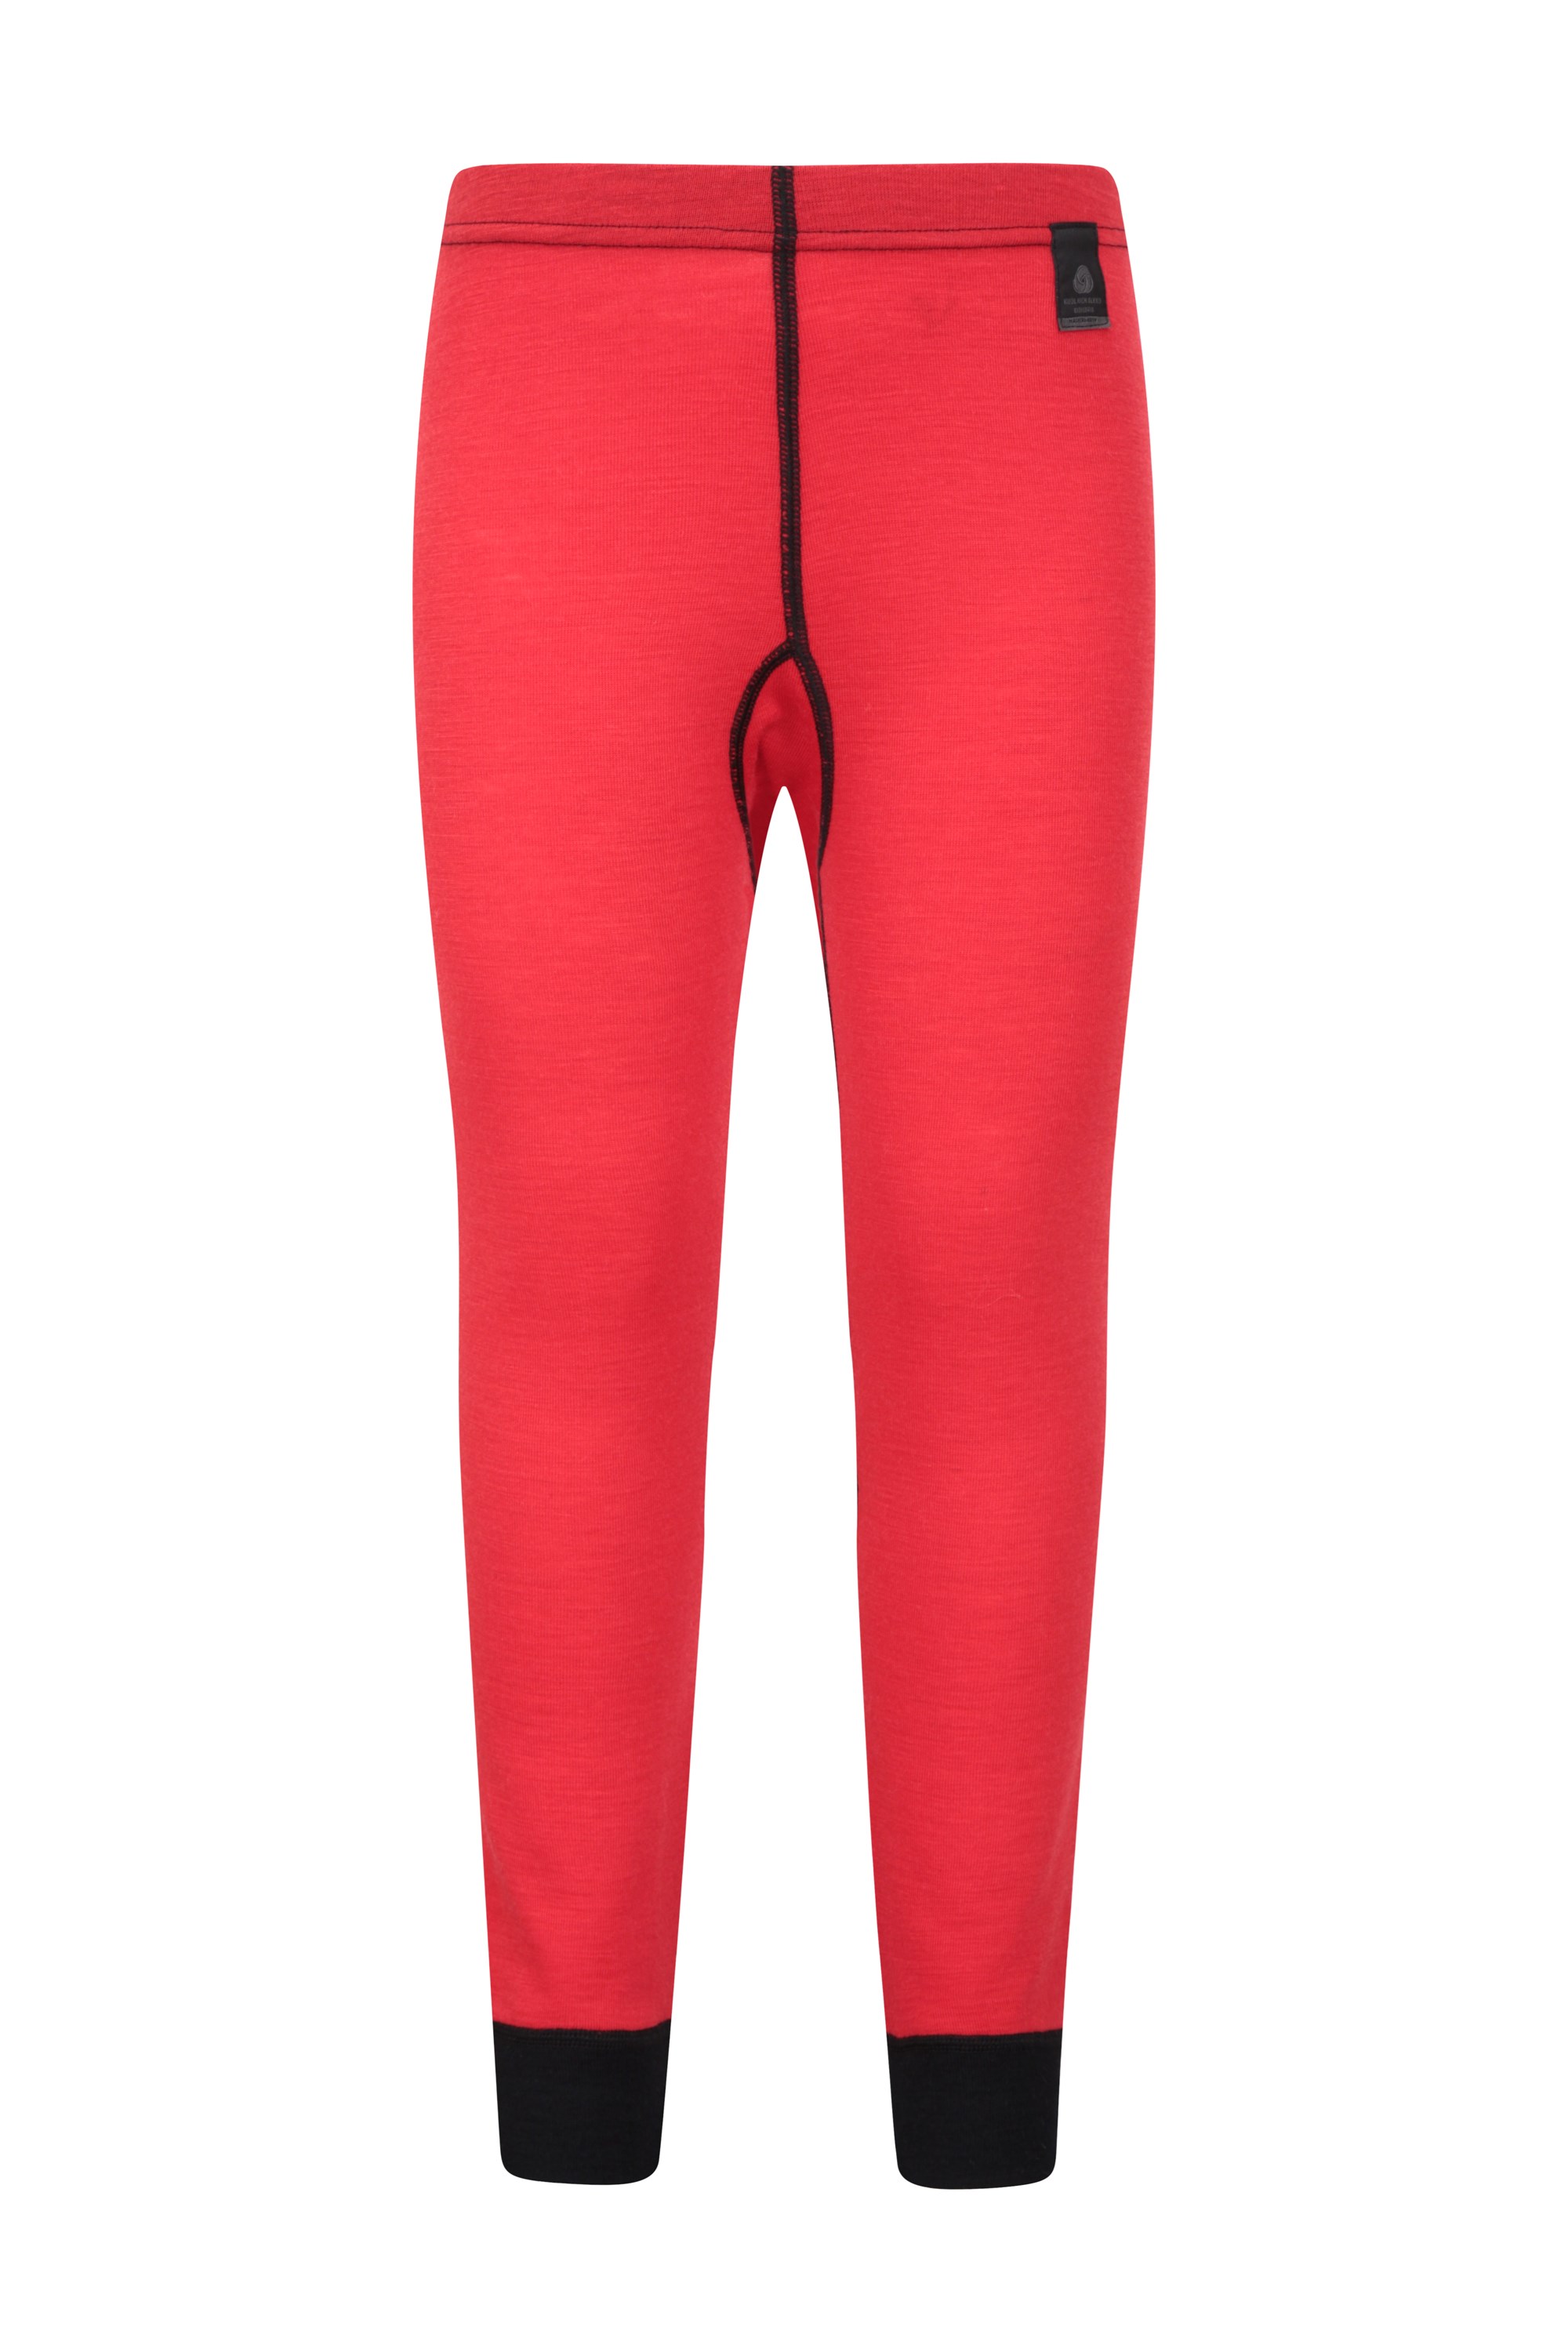 Pantalon thermique enfant Merino-base layer - Rouge